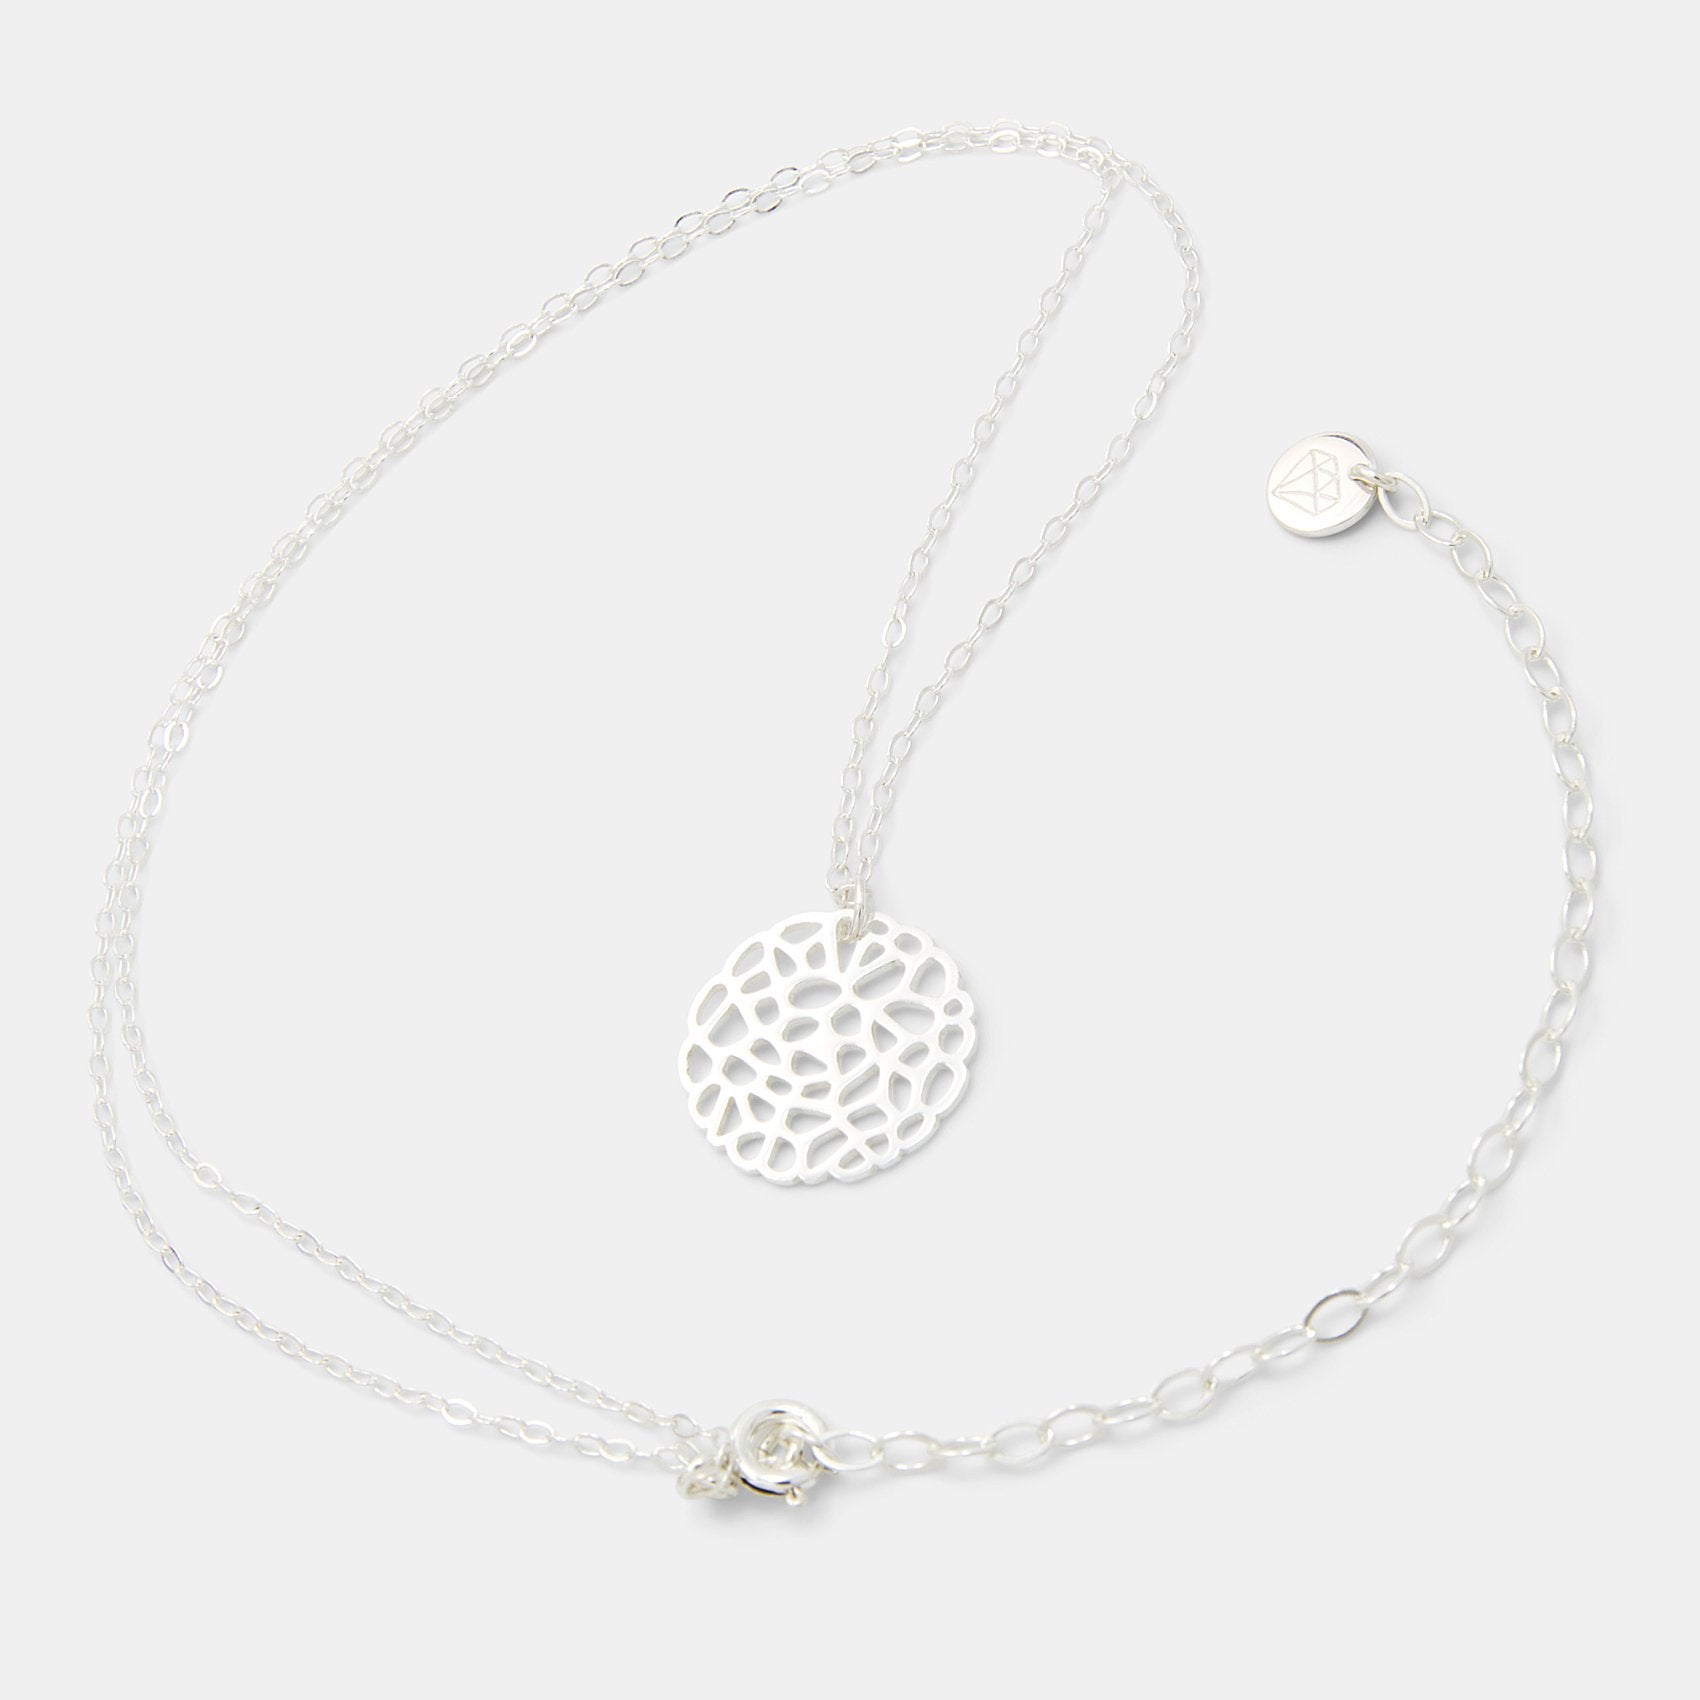 Coral silver pendant necklace (small) - Simone Walsh Jewellery Australia